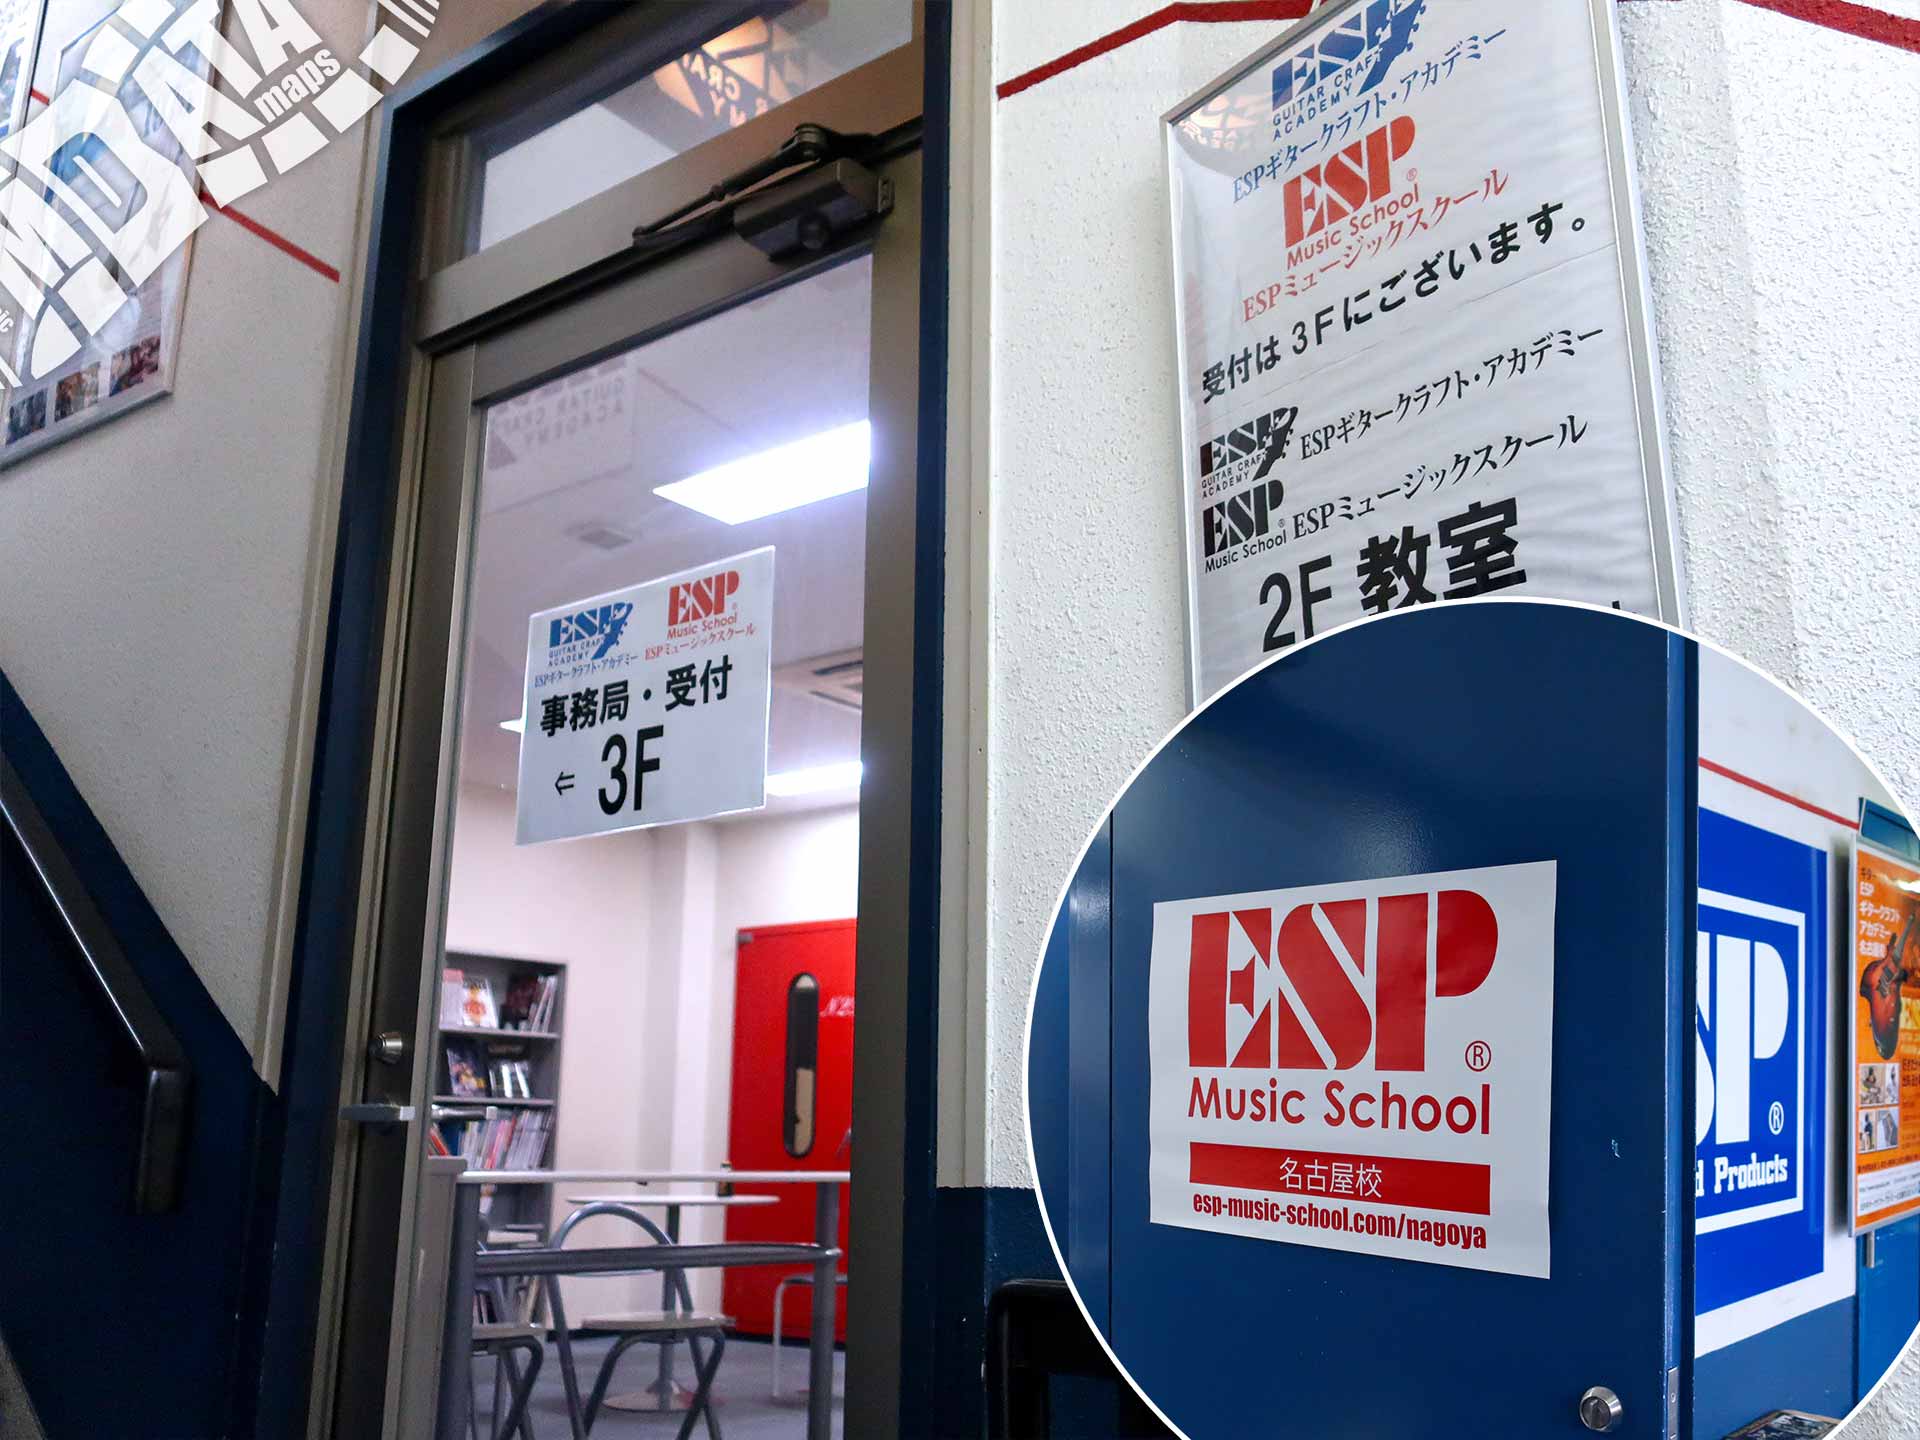 Espミュージックスクール名古屋校 愛知県名古屋市中区 Music School Net